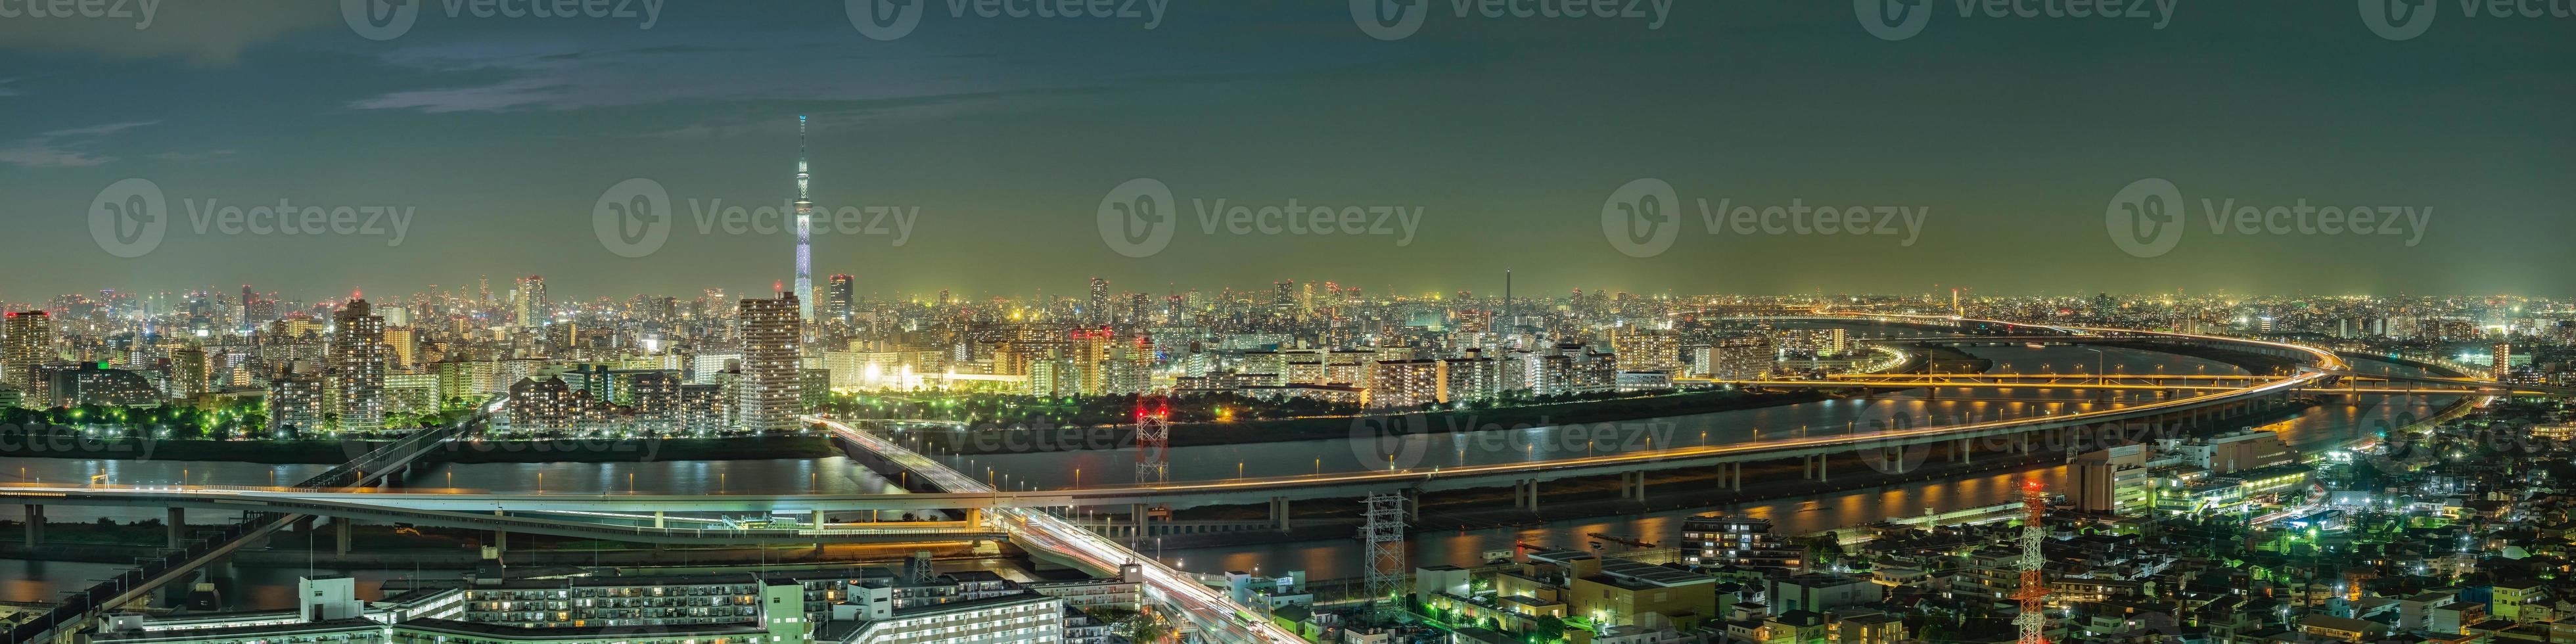 stadsbilden i tokyo, japan, asien foto